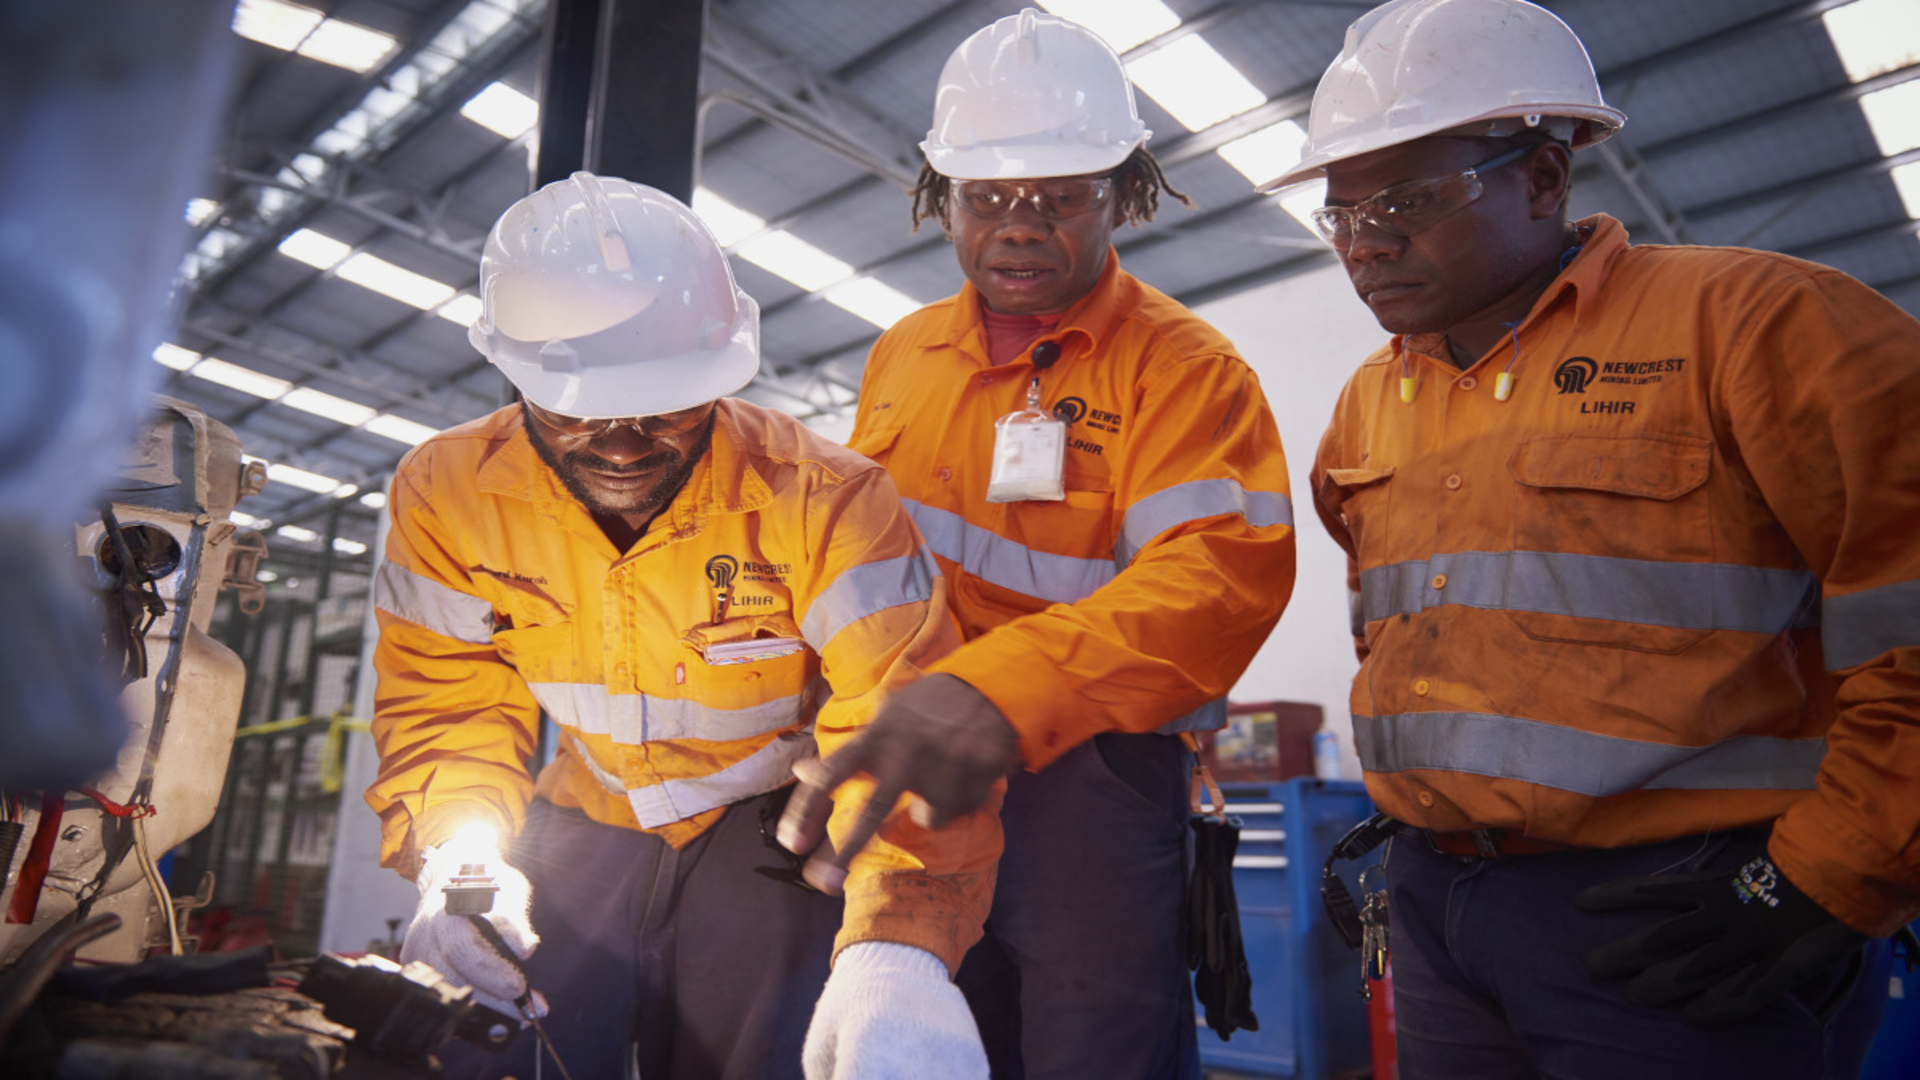 Mining superintendent jobs in africa